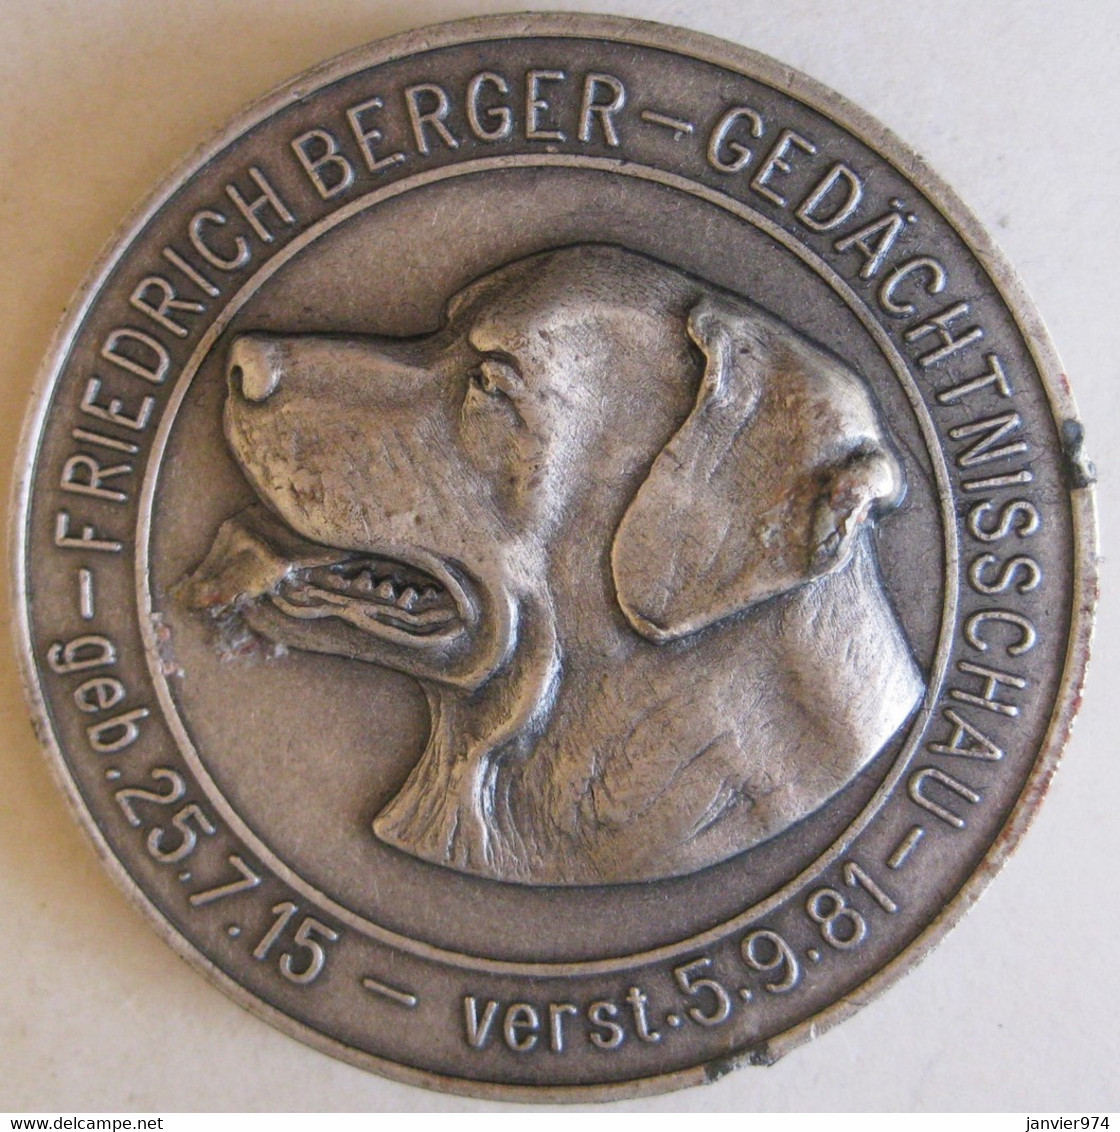 Médaille En Aluminium Friedrich Berger Gedächtnisschau 1981 . Hauptzuchtwart - ADRK . Chien - Profesionales/De Sociedad